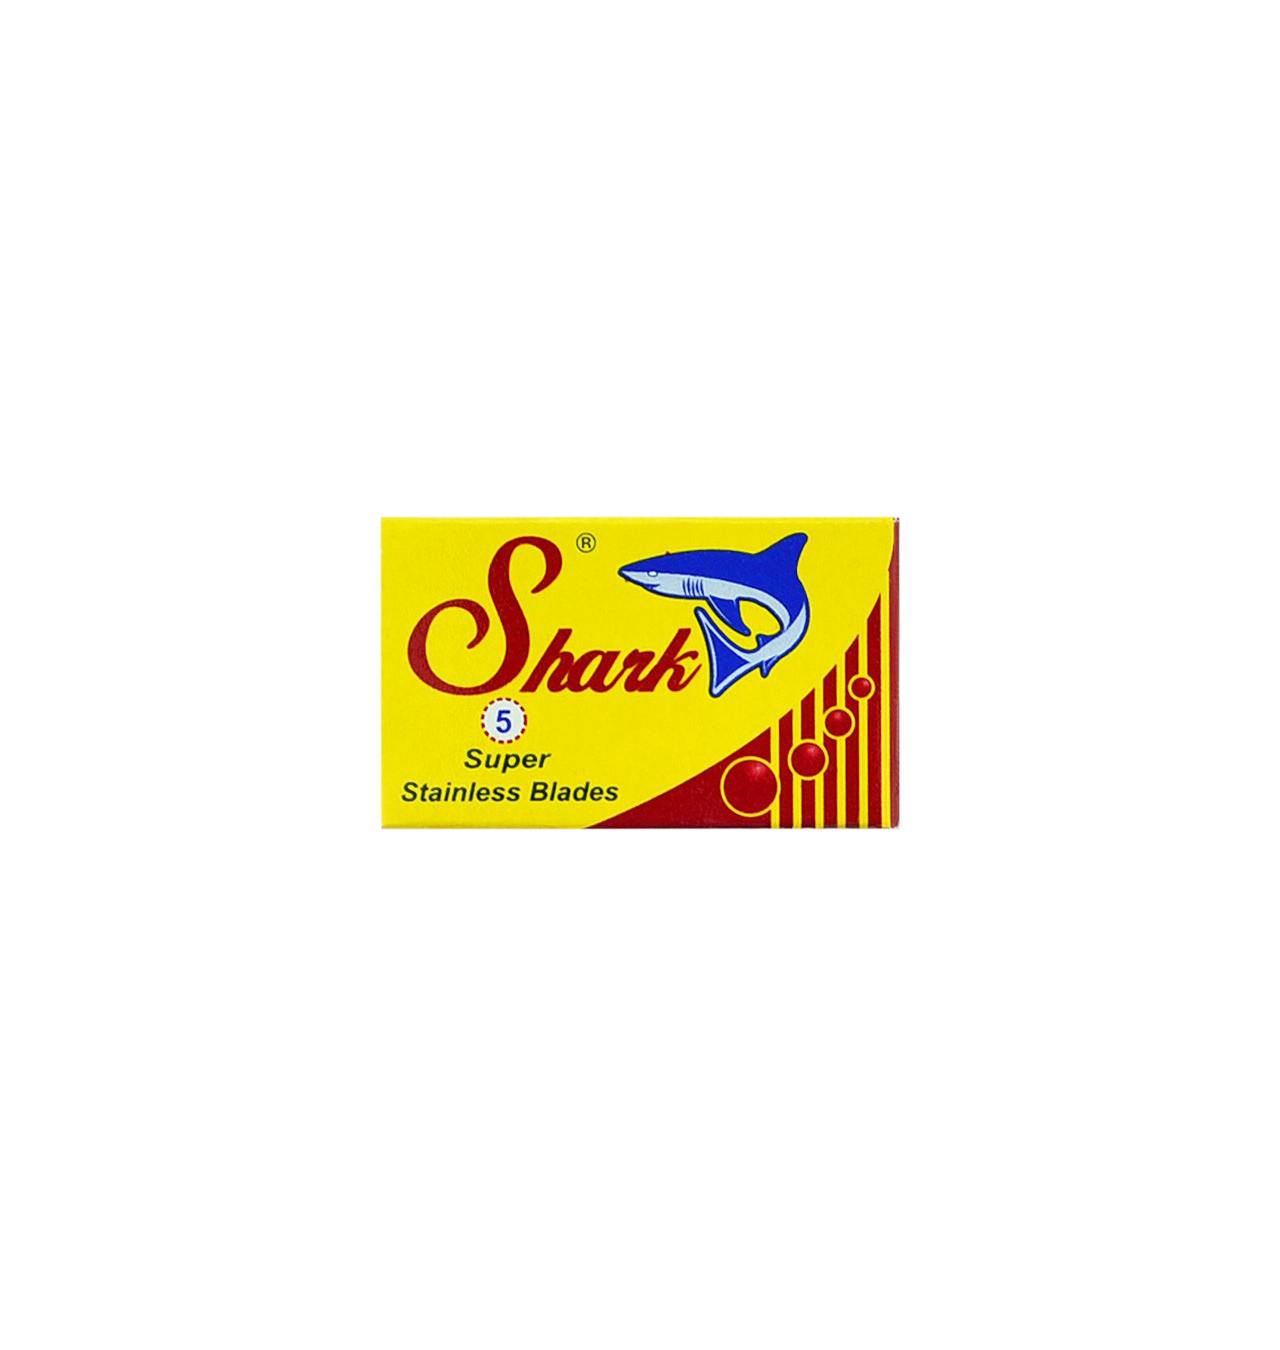 Nõberu - Shark Razor Blades - 5 pack